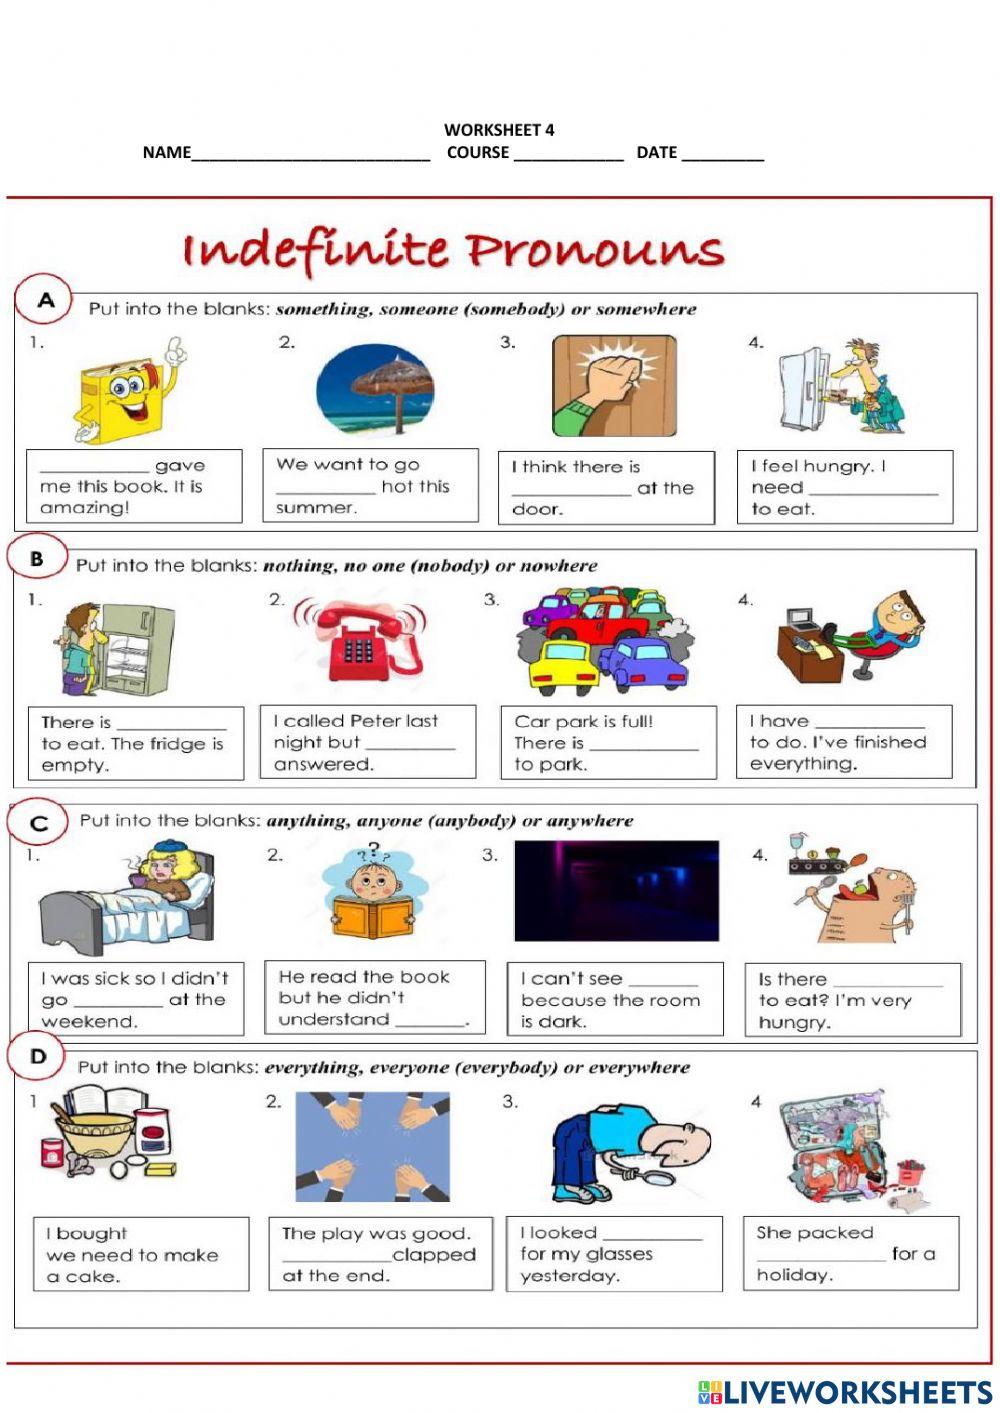 Indefinite Pronouns 2nd BGU